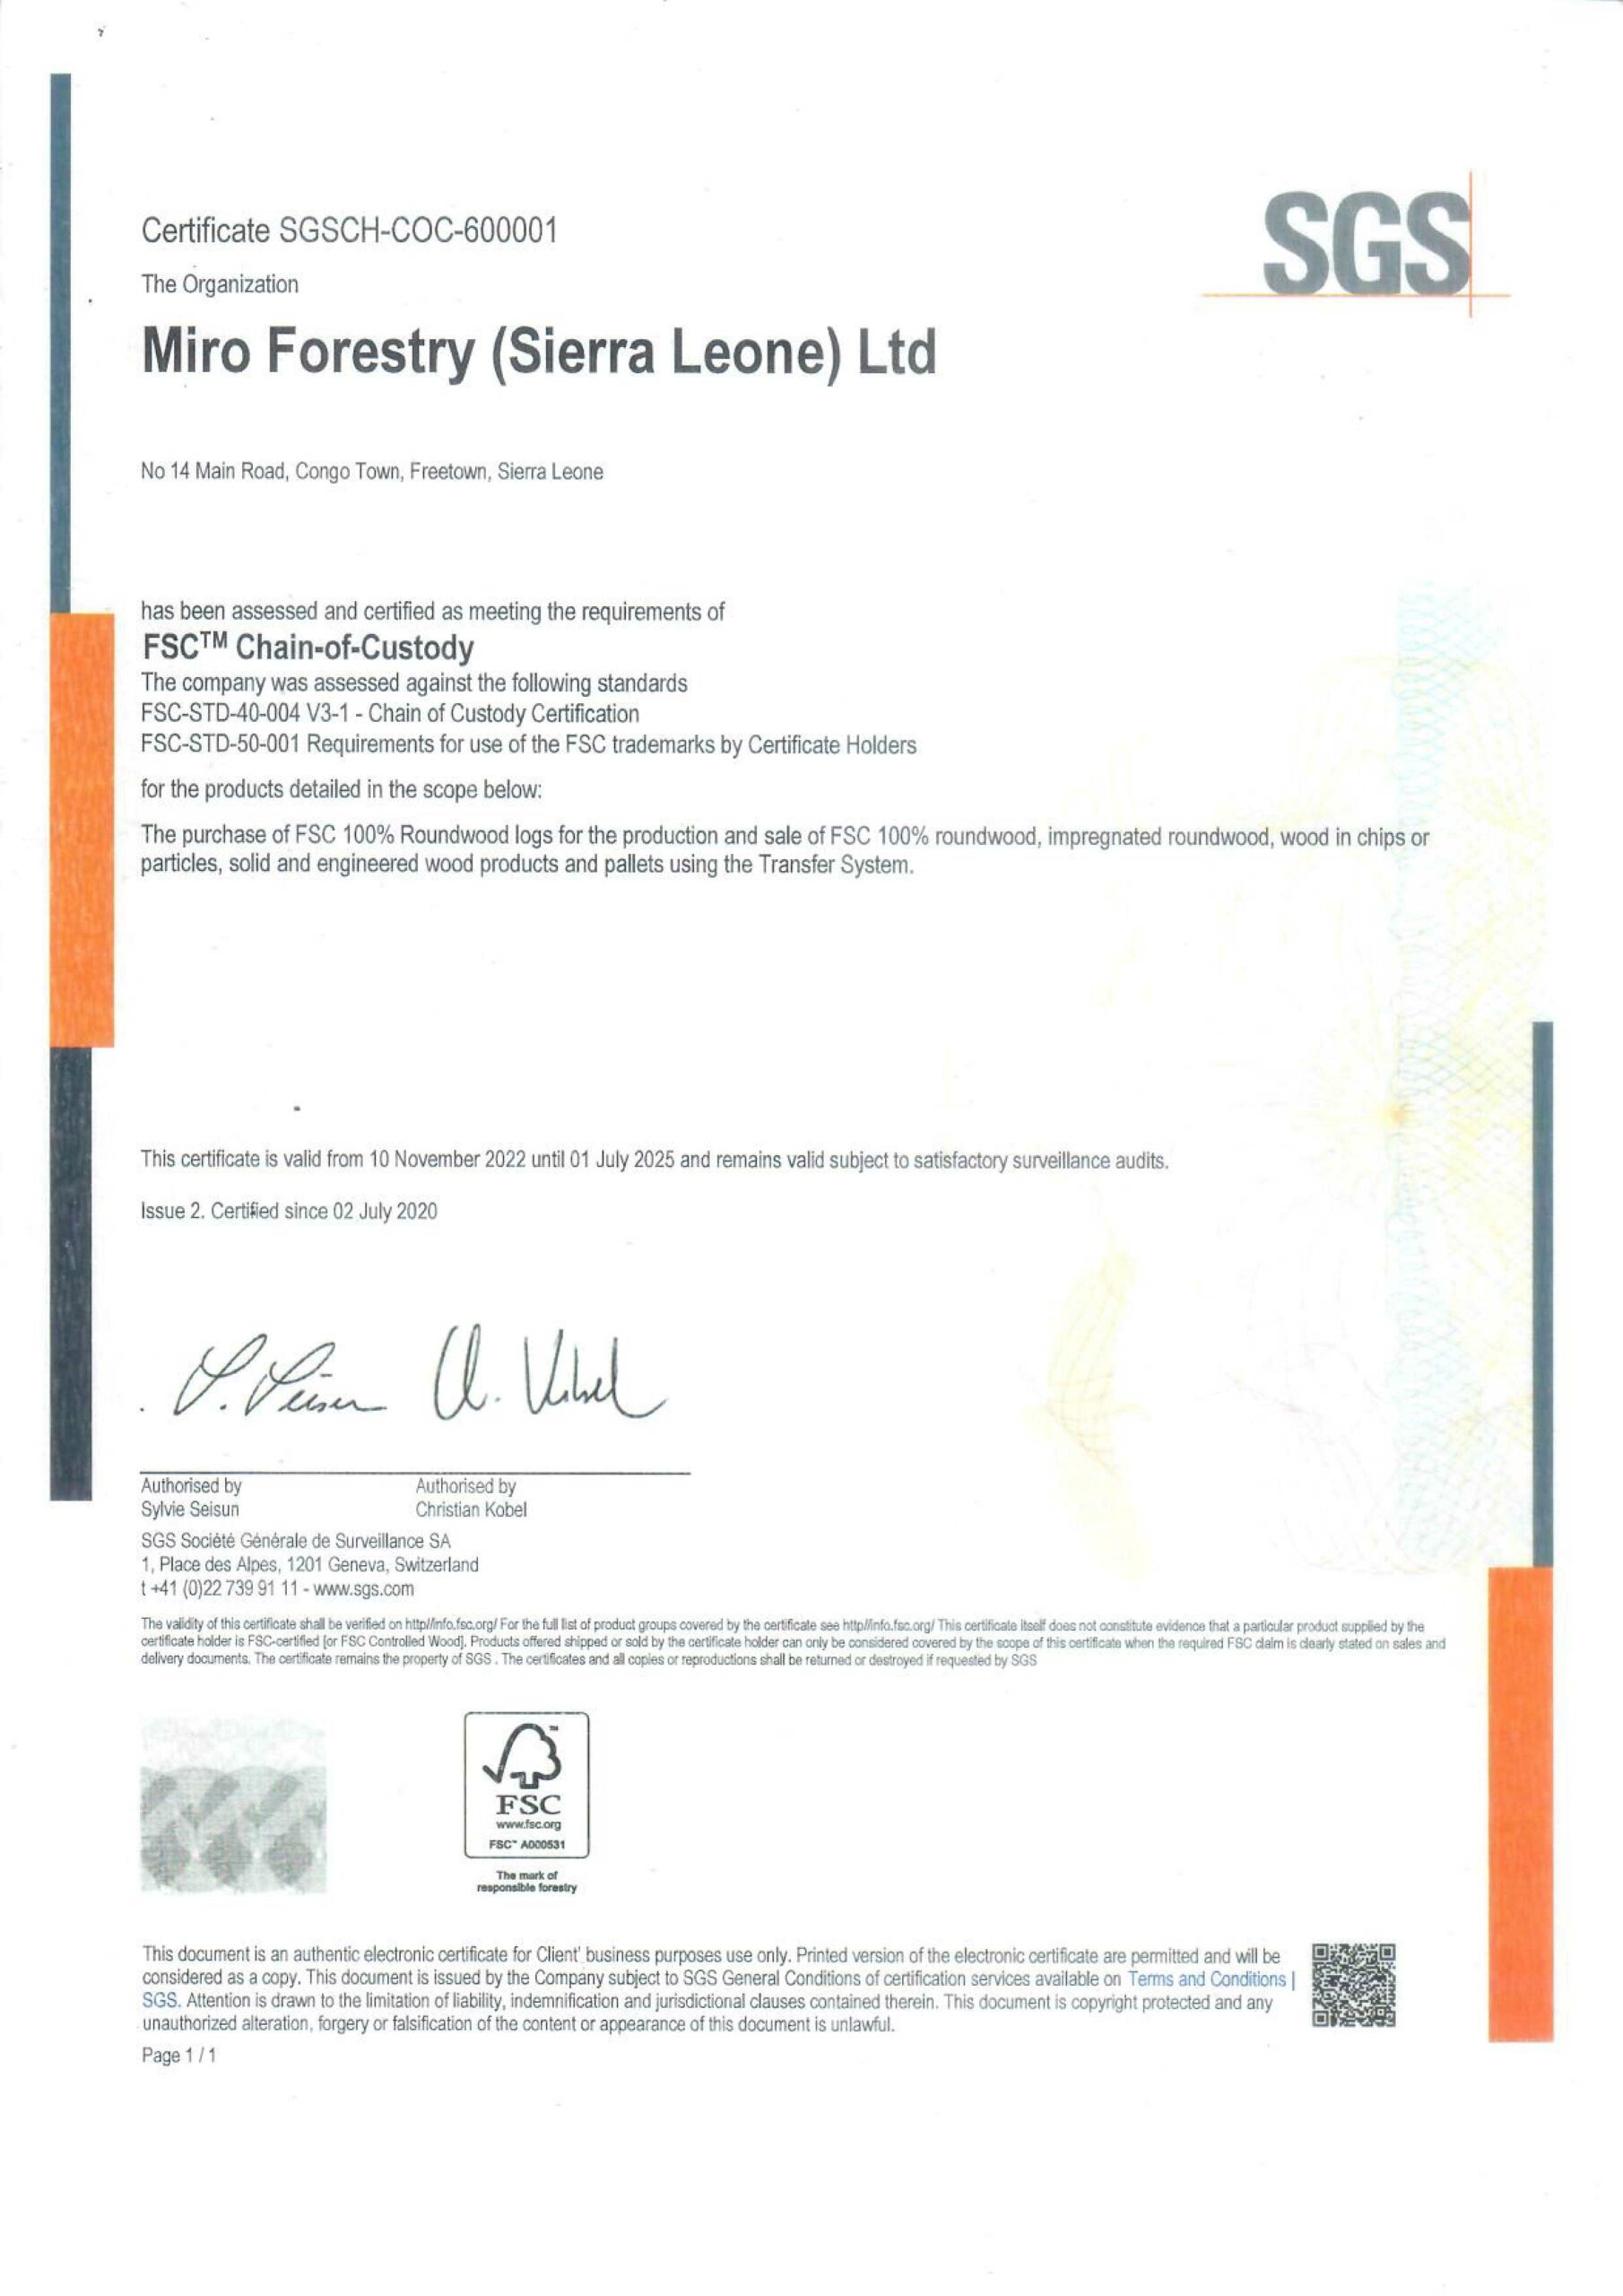 MFSL COC Certificate